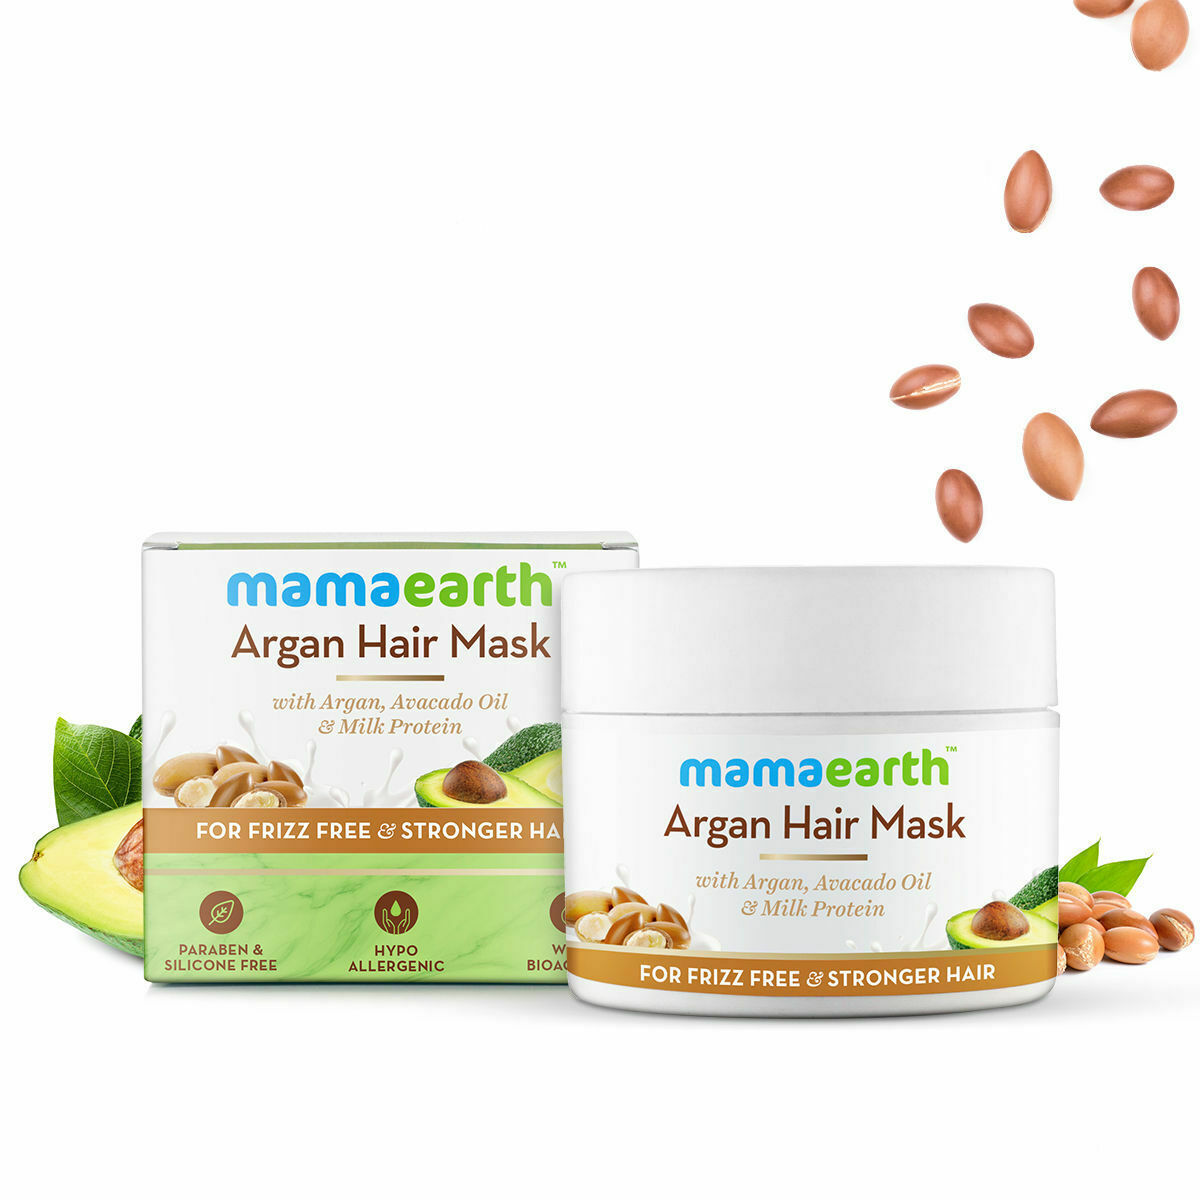 Mamaearth Argan Hair Mask With Argan, Avocado Oil & Milk Protein 200gm,Pack of 1